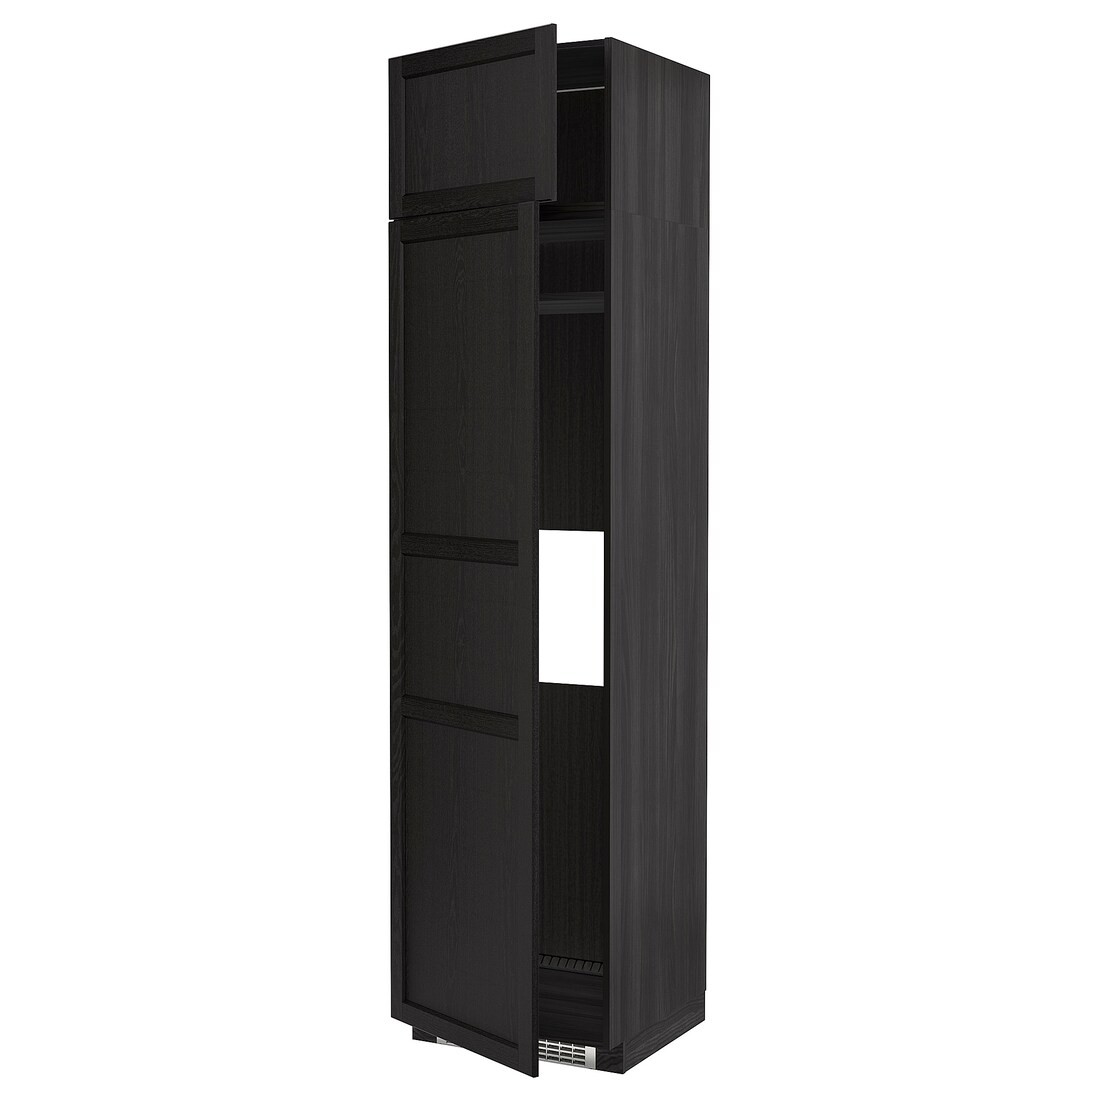 IKEA METOD МЕТОД Высокий шкаф для холодильника / морозильника, черный / Lerhyttan черная морилка, 60x60x240 см 79460923 | 794.609.23